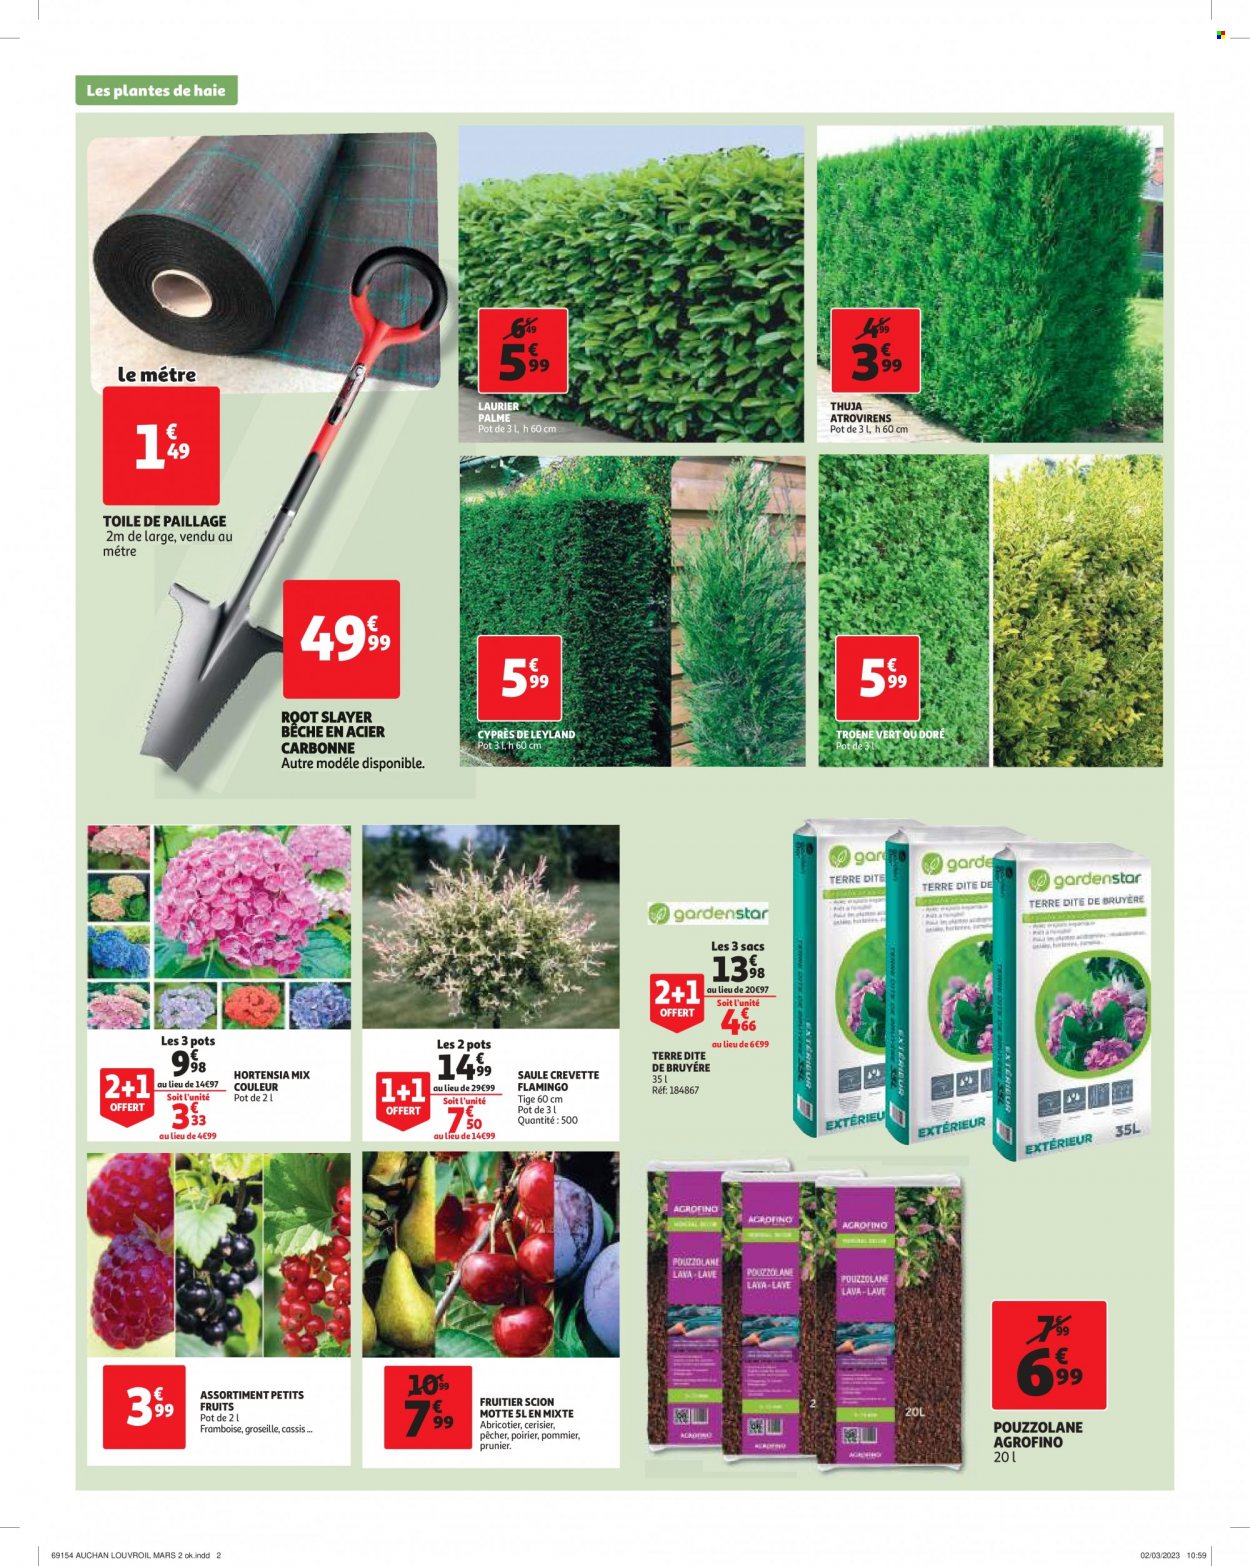 Catalogue Auchan - 14.03.2023 - 25.03.2023. 